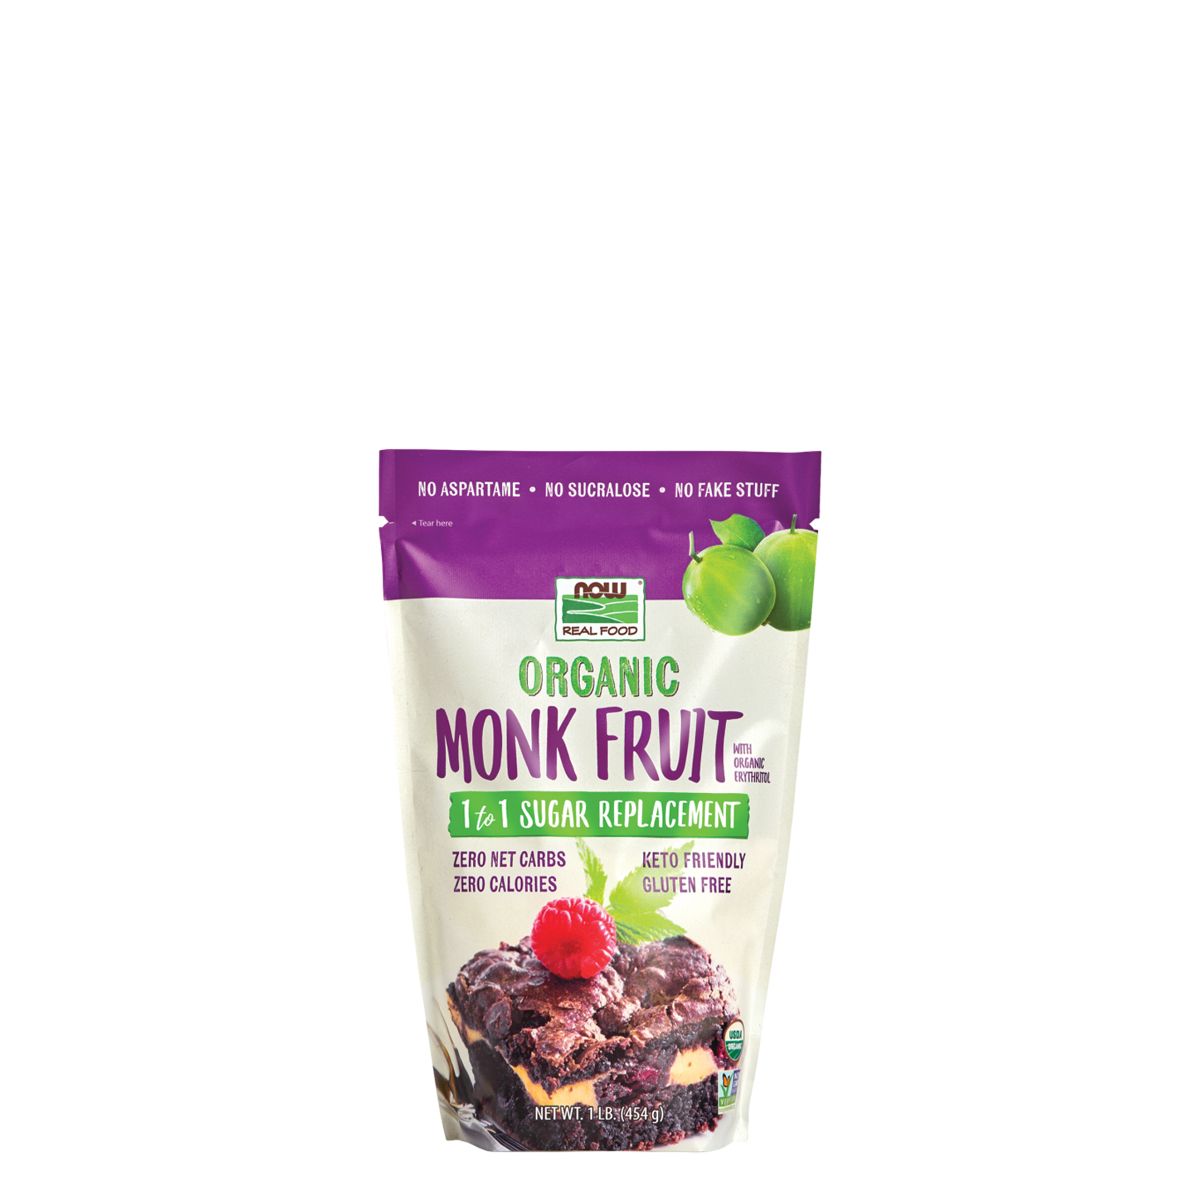 Bio monk fruit + eritrit édesítőszer keverék, Now Organic Monk Fruit with Erythritol, 454 g